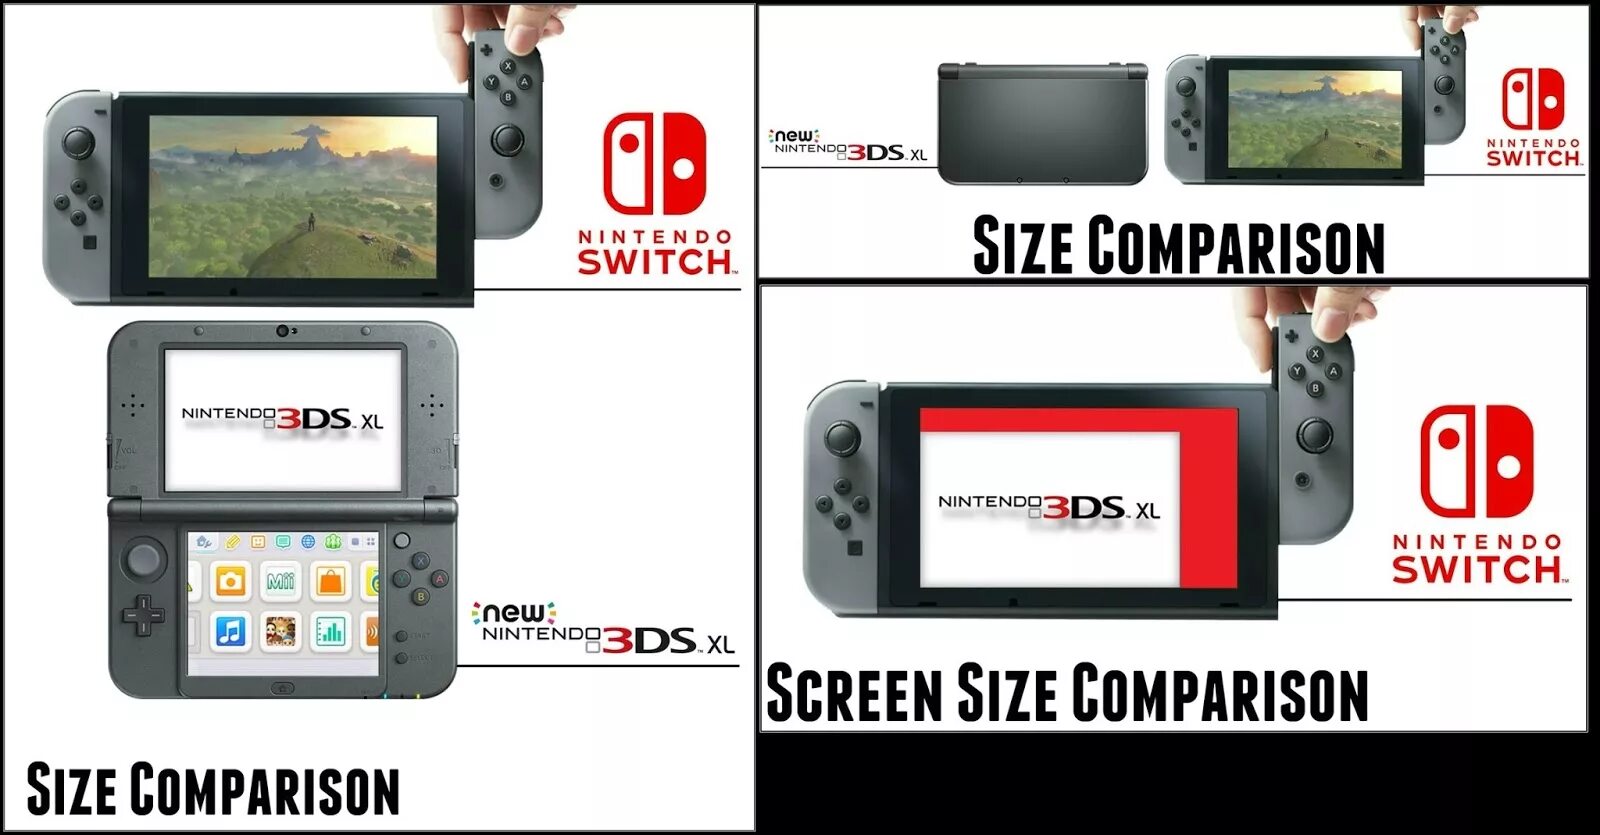 Nintendo Switch размер дисплея. Nintendo Switch габариты. Сравнение размеров New Nintendo 3ds. Размеры Нинтендо свитч.